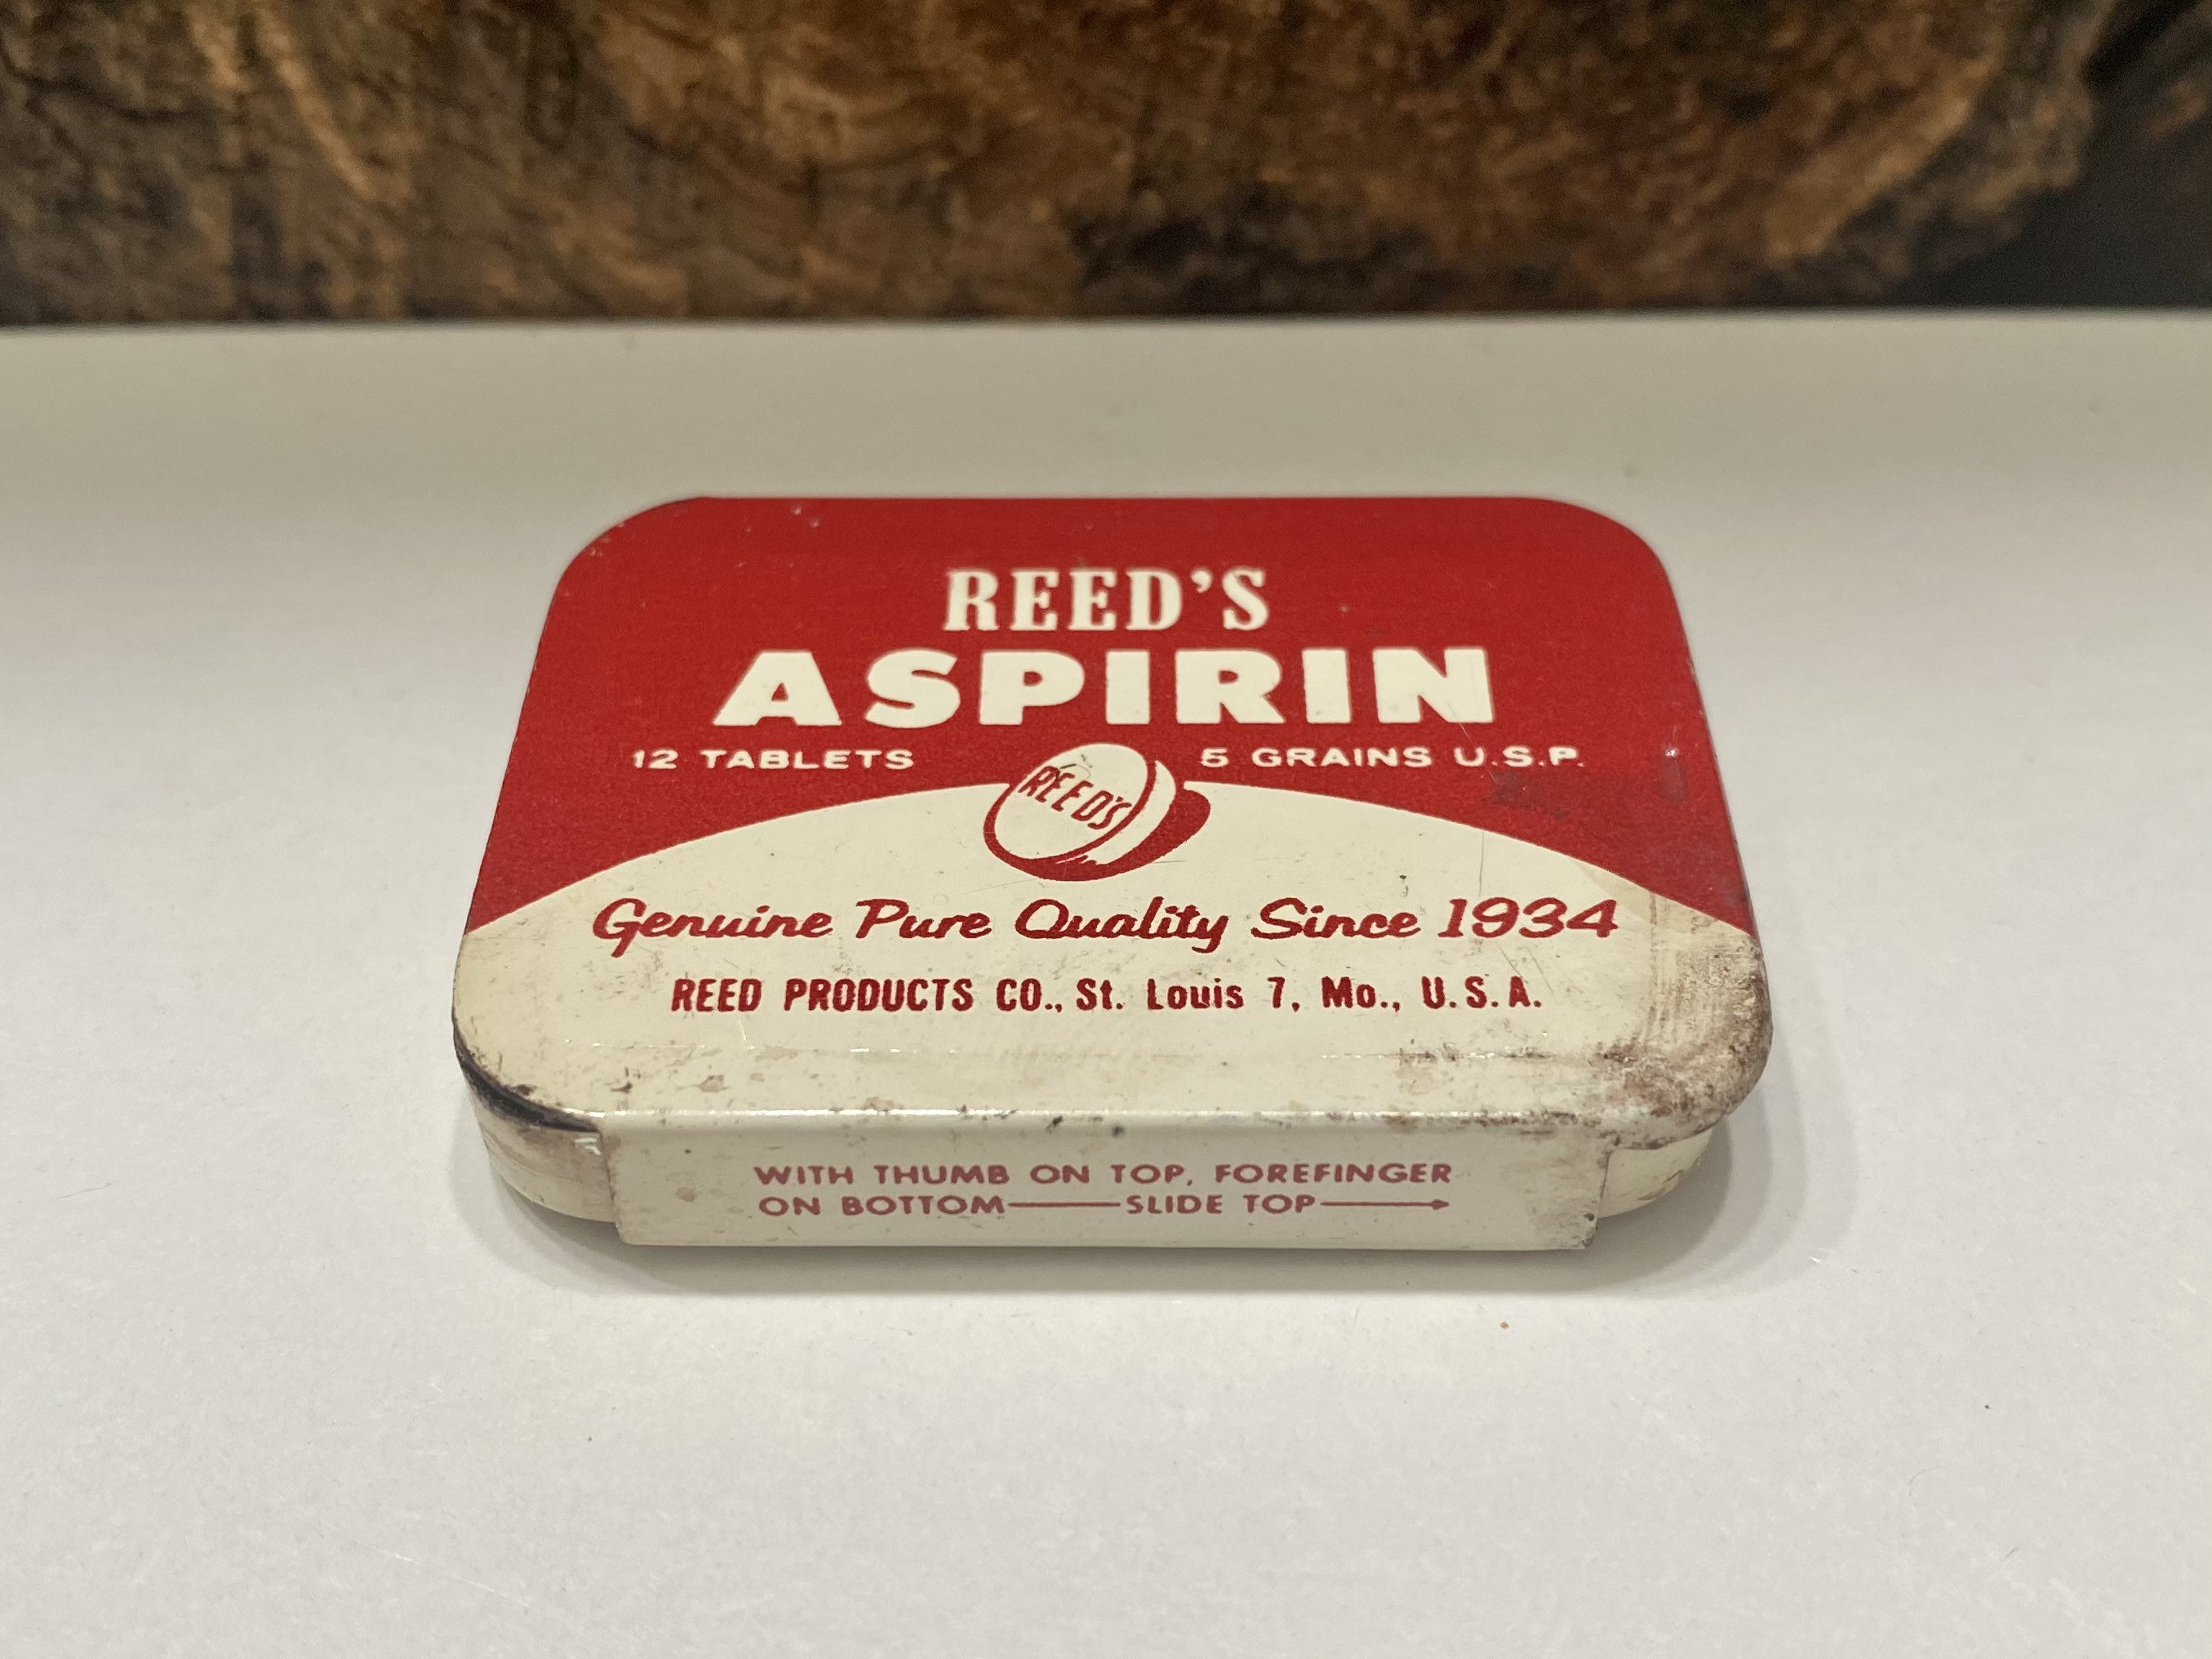 Vintage Aspirin Reeds Aspirin 12 Tablets of Aspirin picture